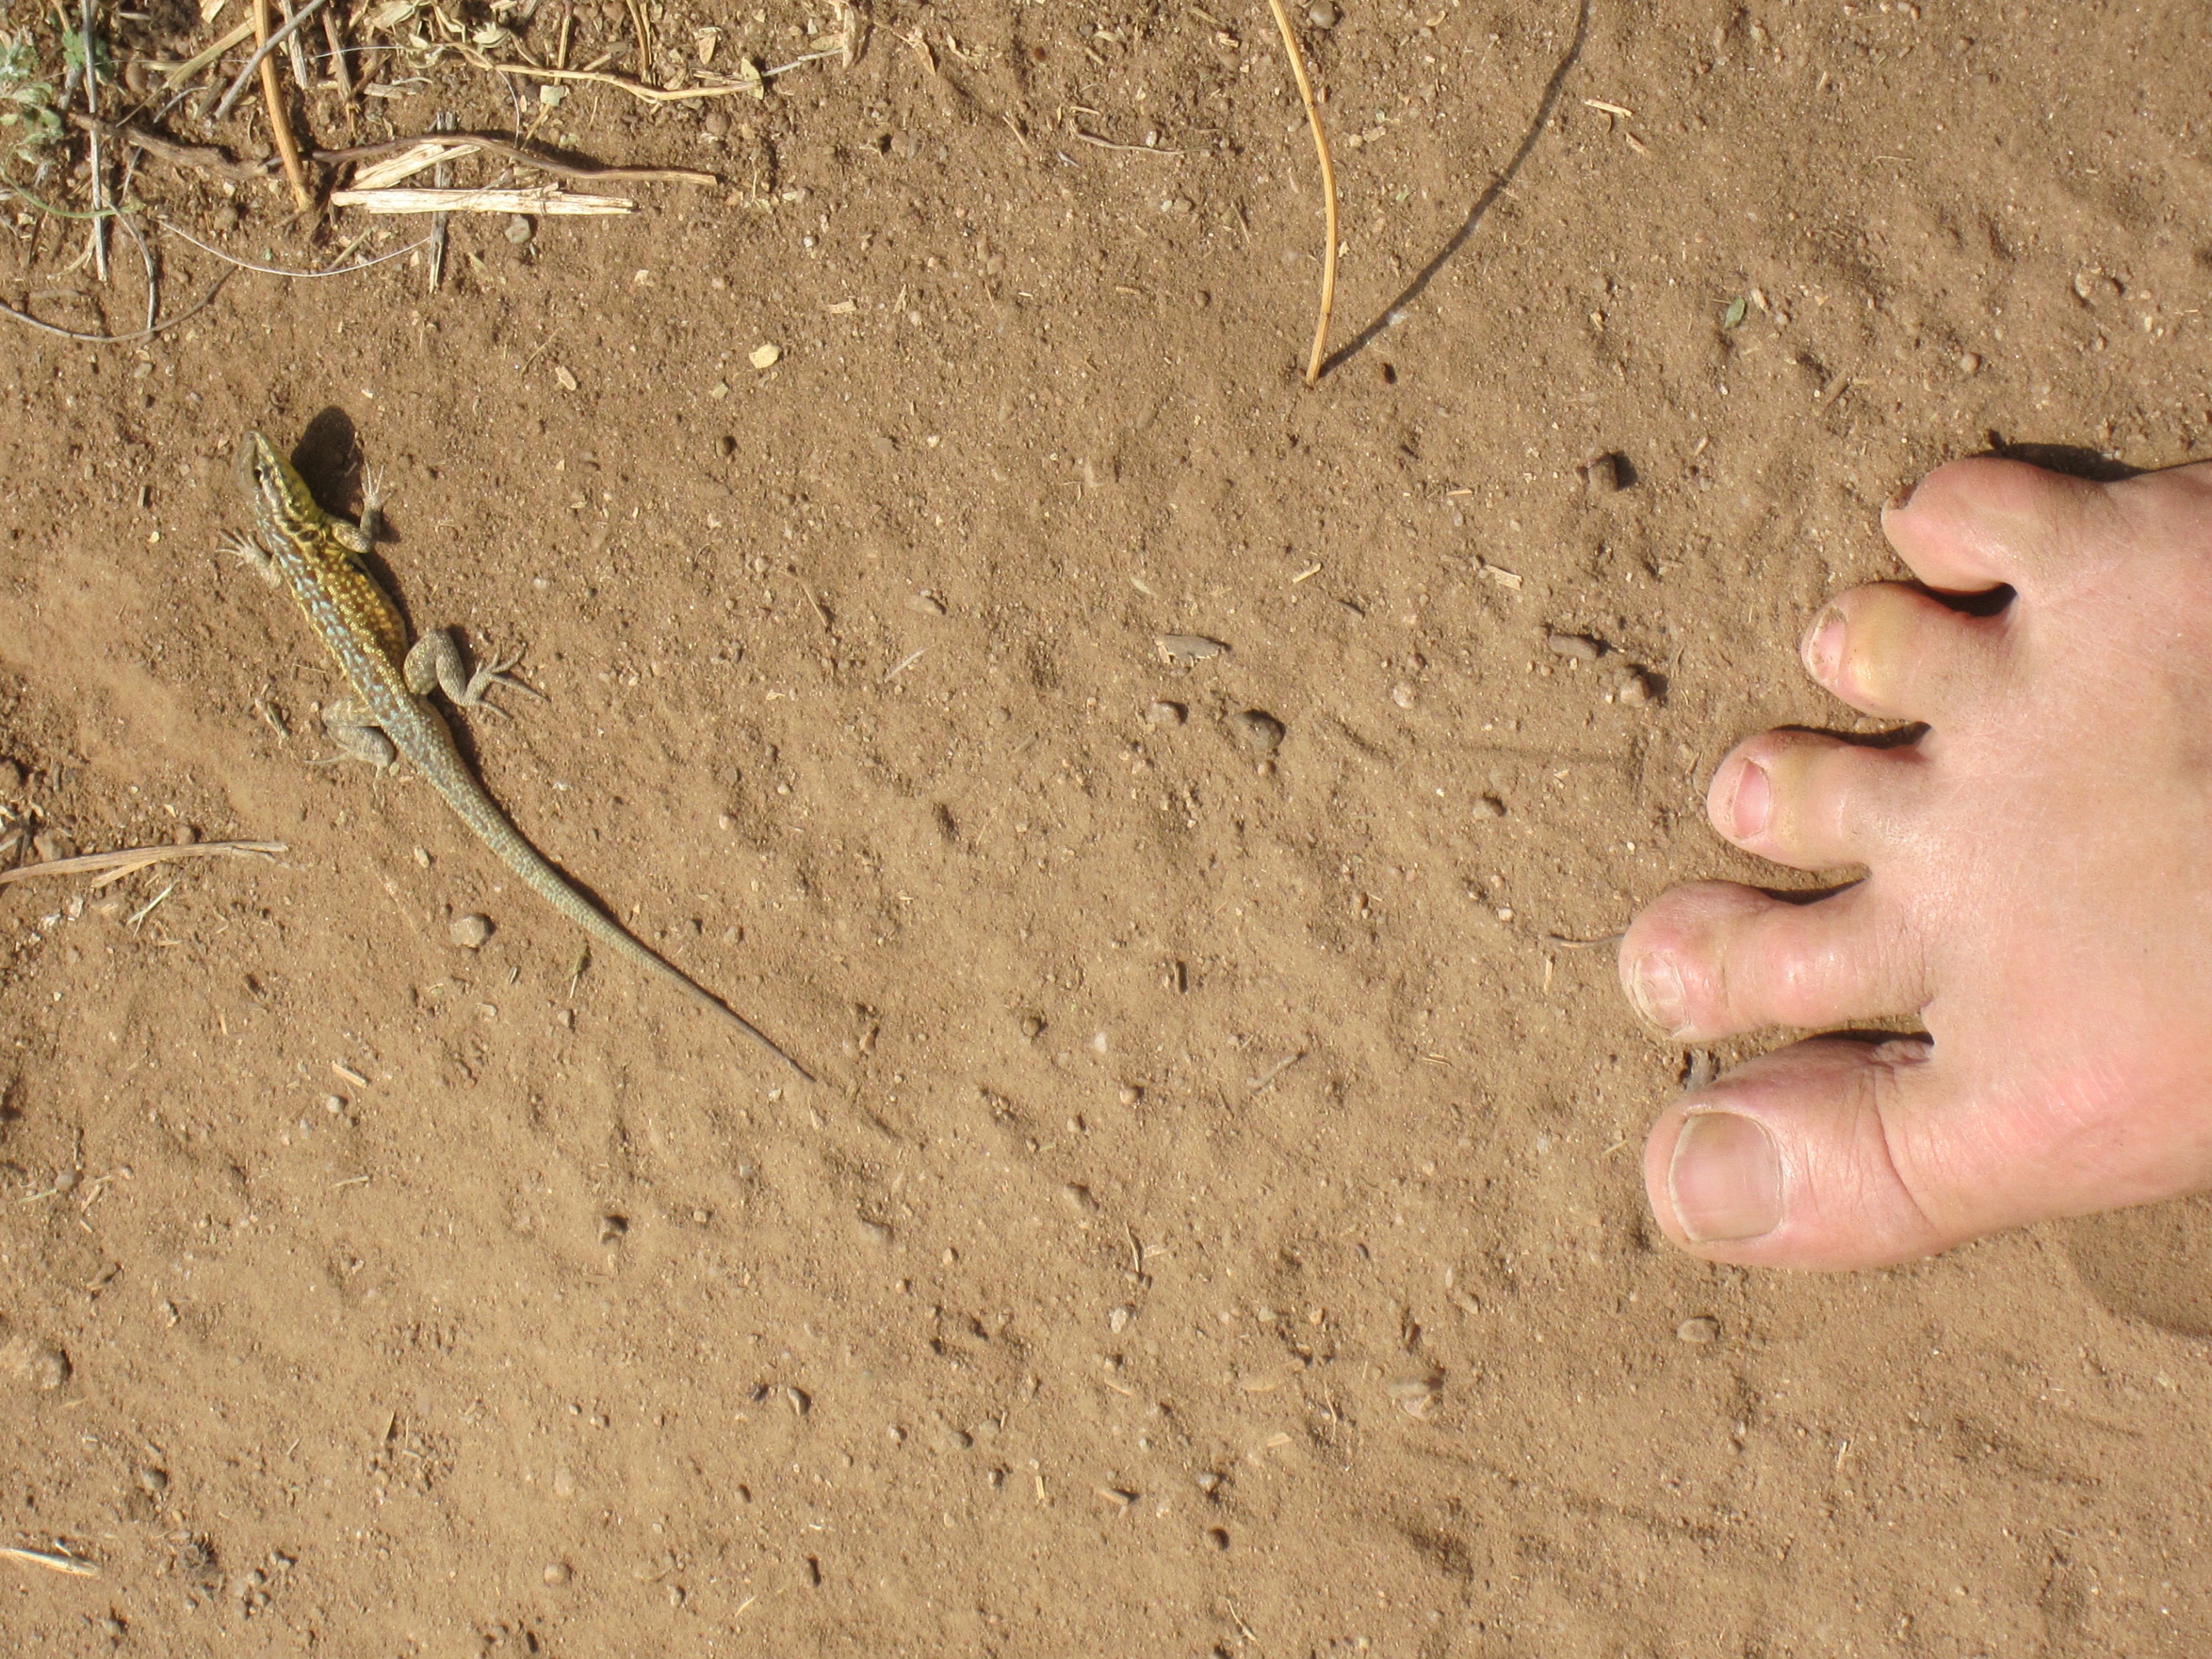 Lizard crawling up womens anus